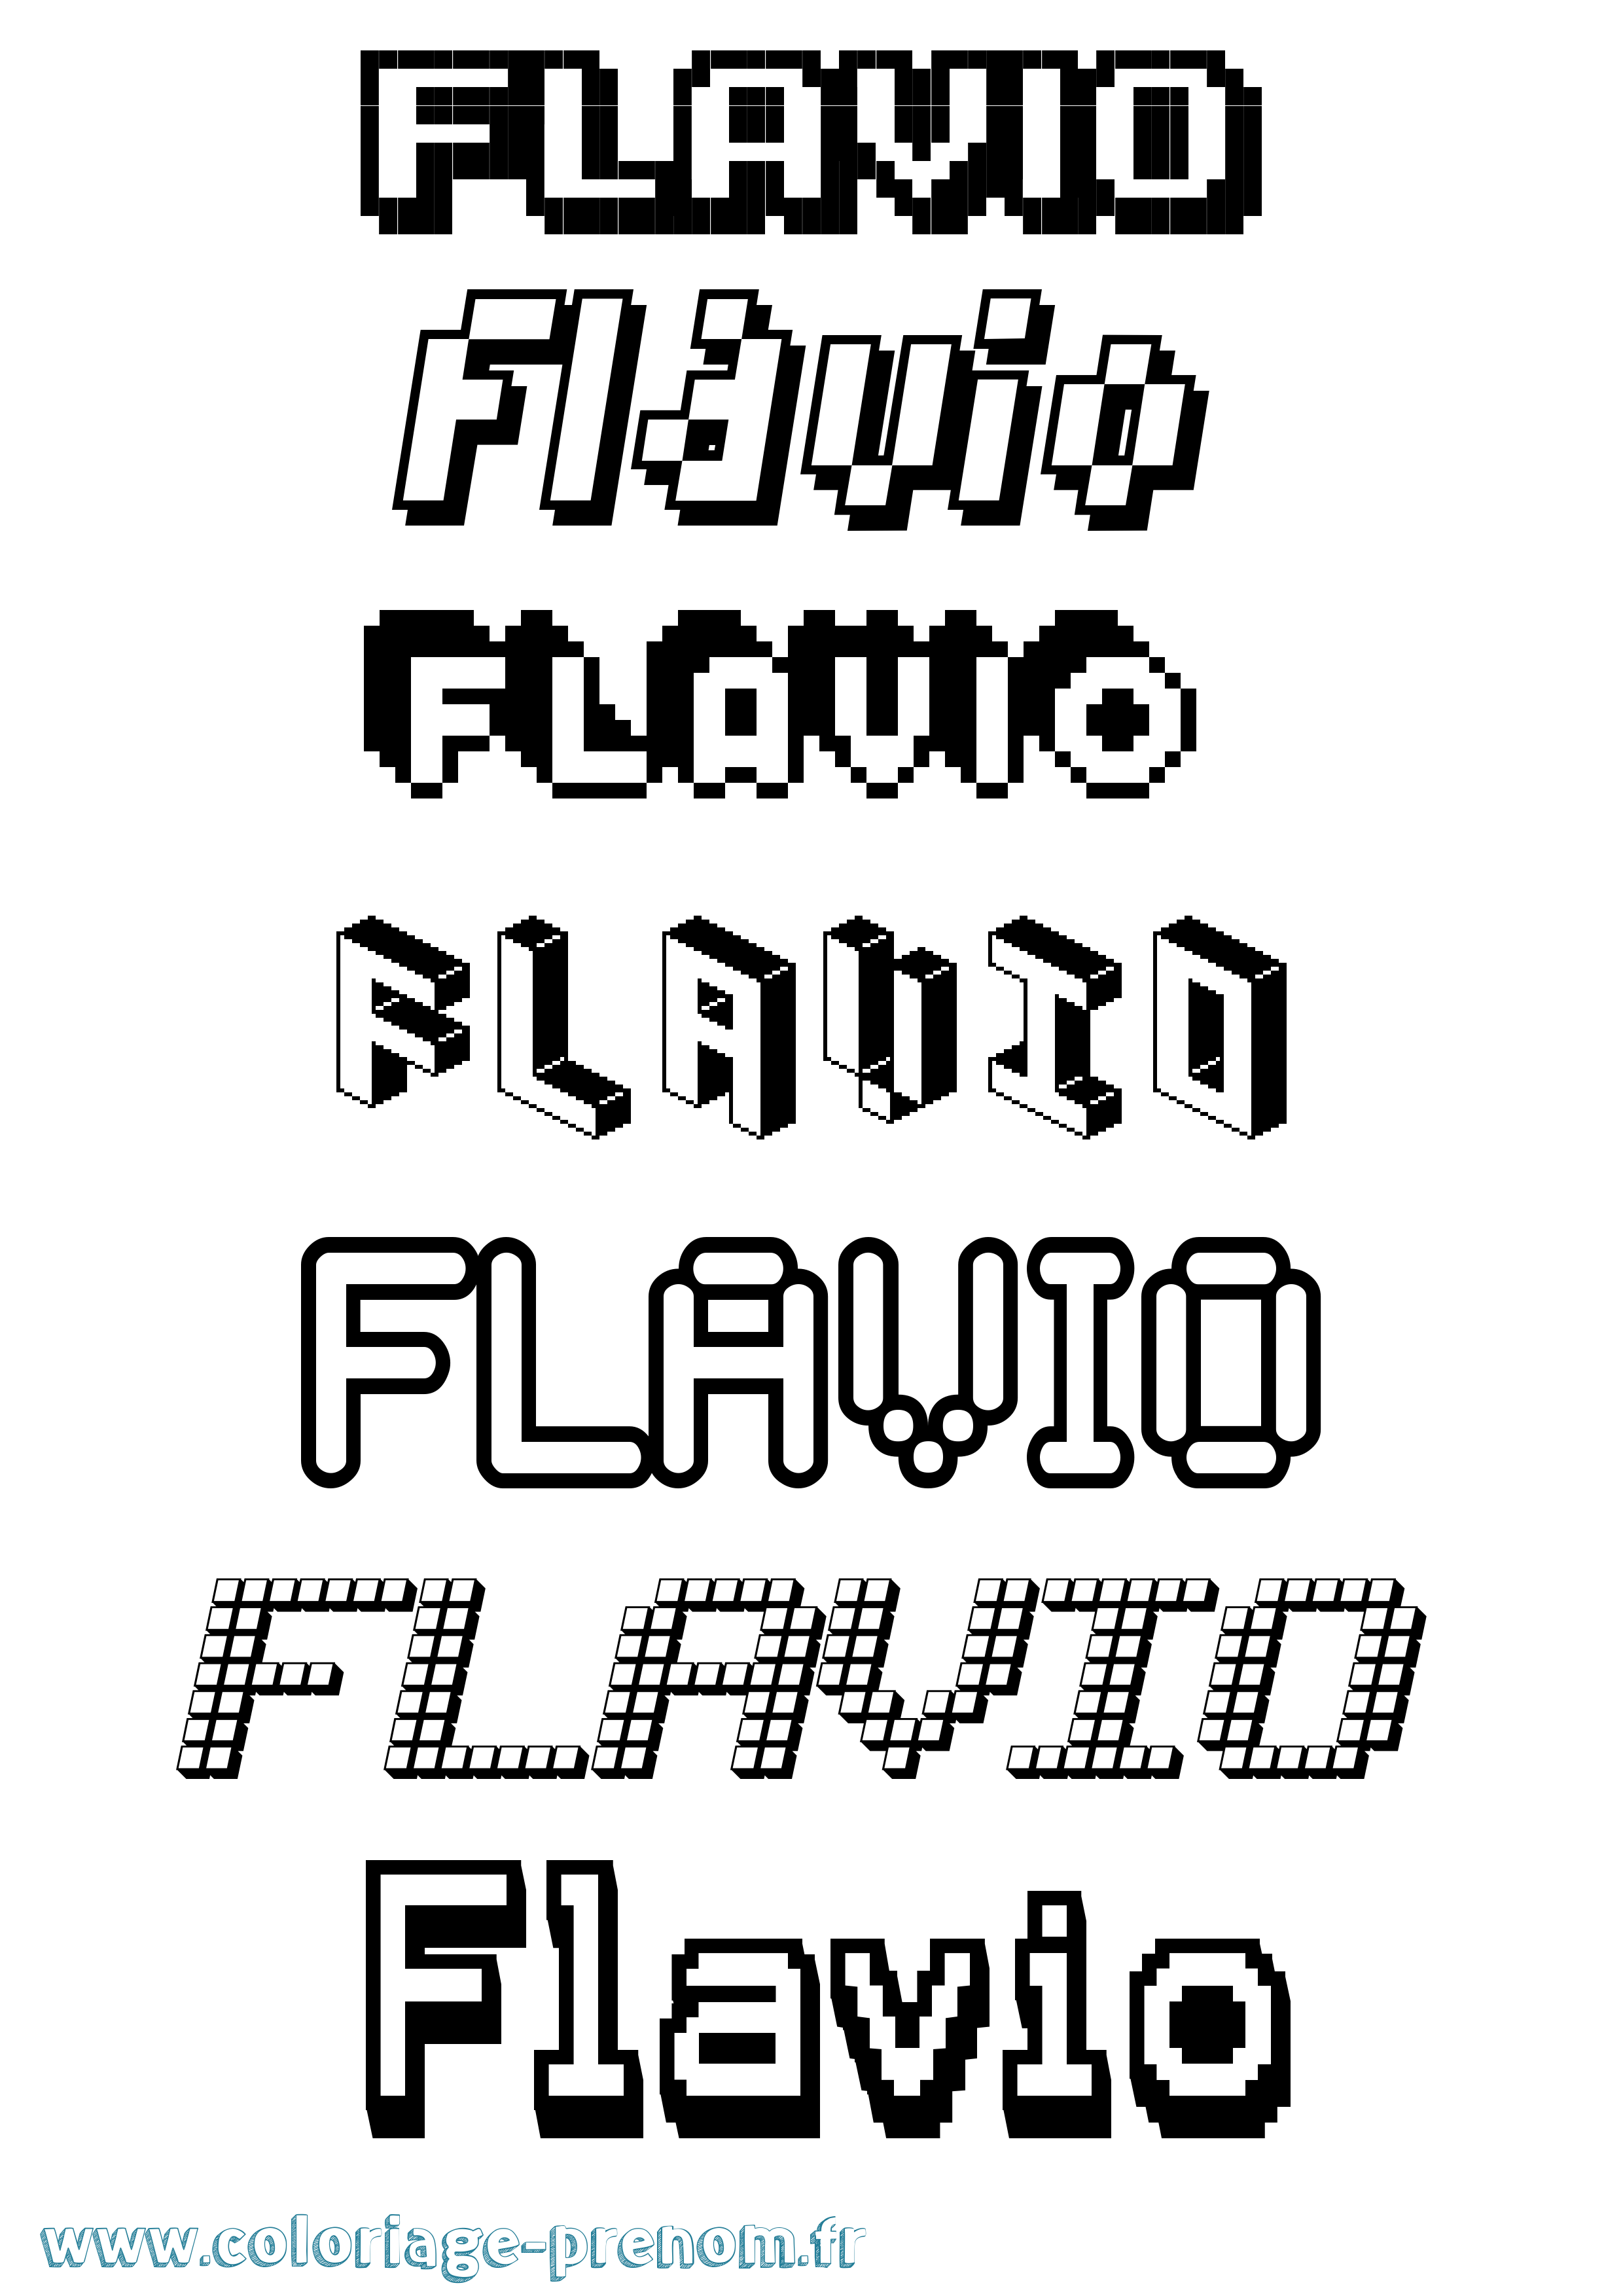 Coloriage prénom Flavio Pixel